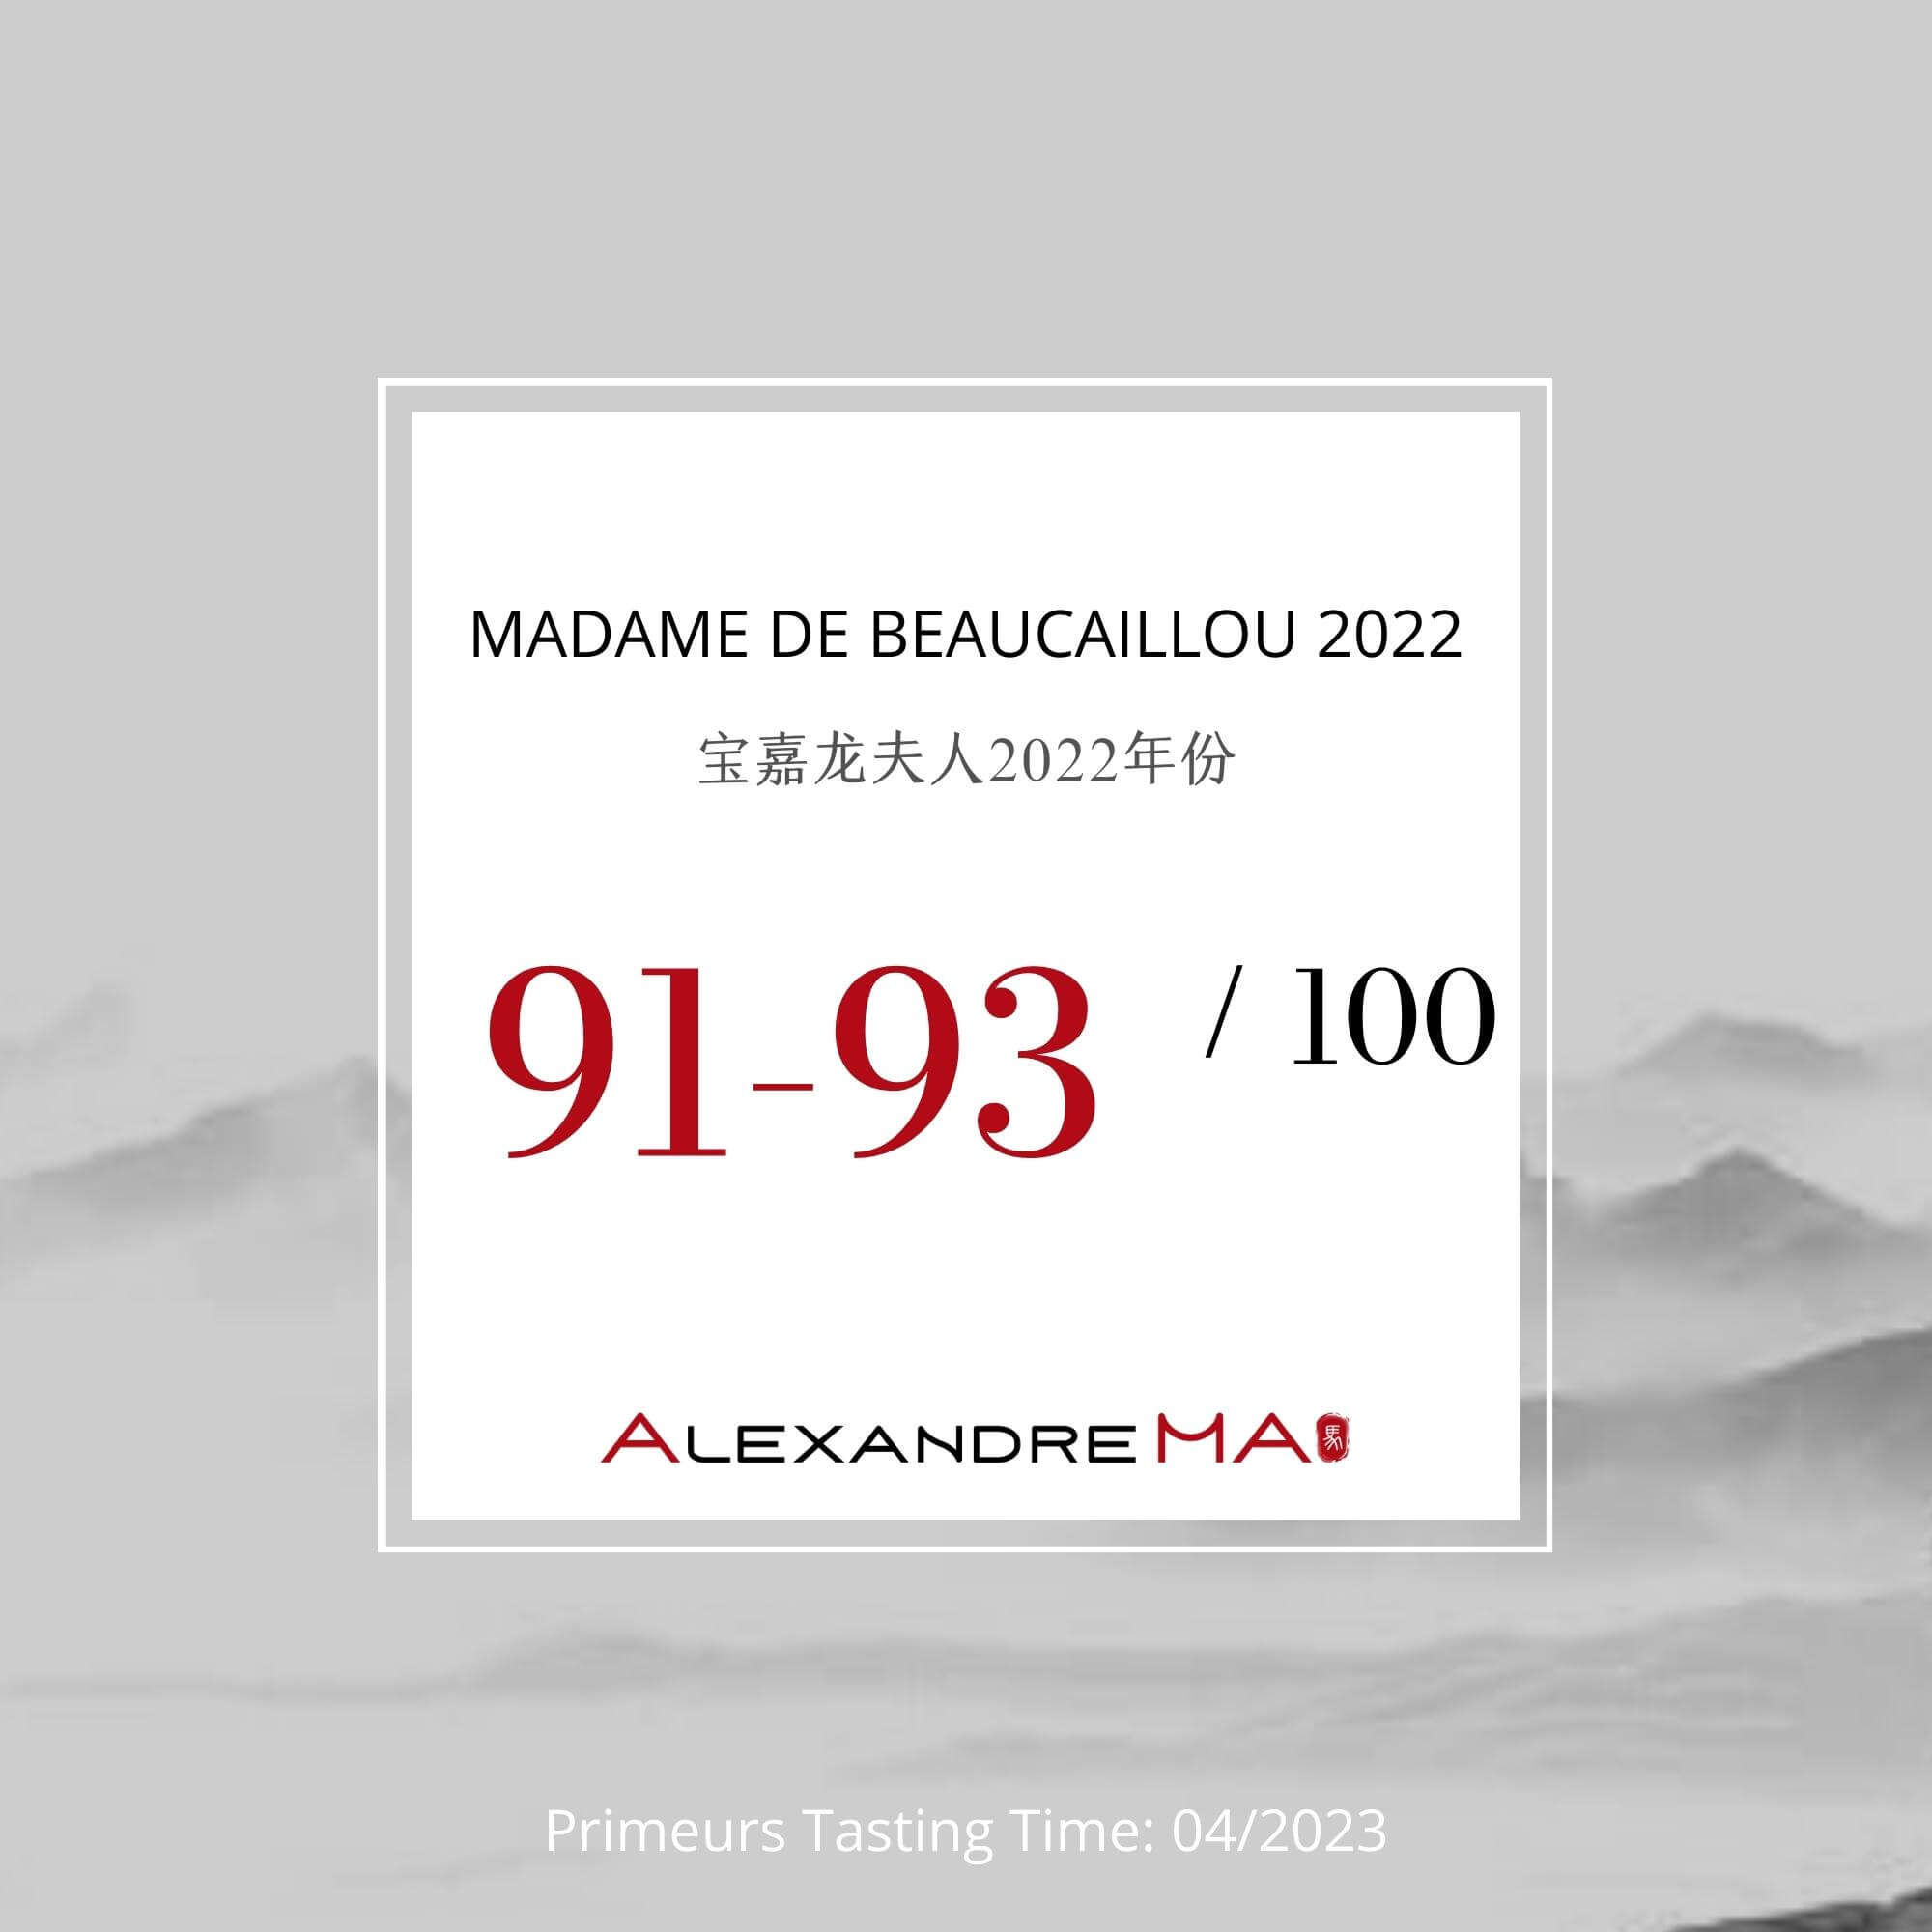 Madame de Beaucaillou 2022 Primeurs - Alexandre MA